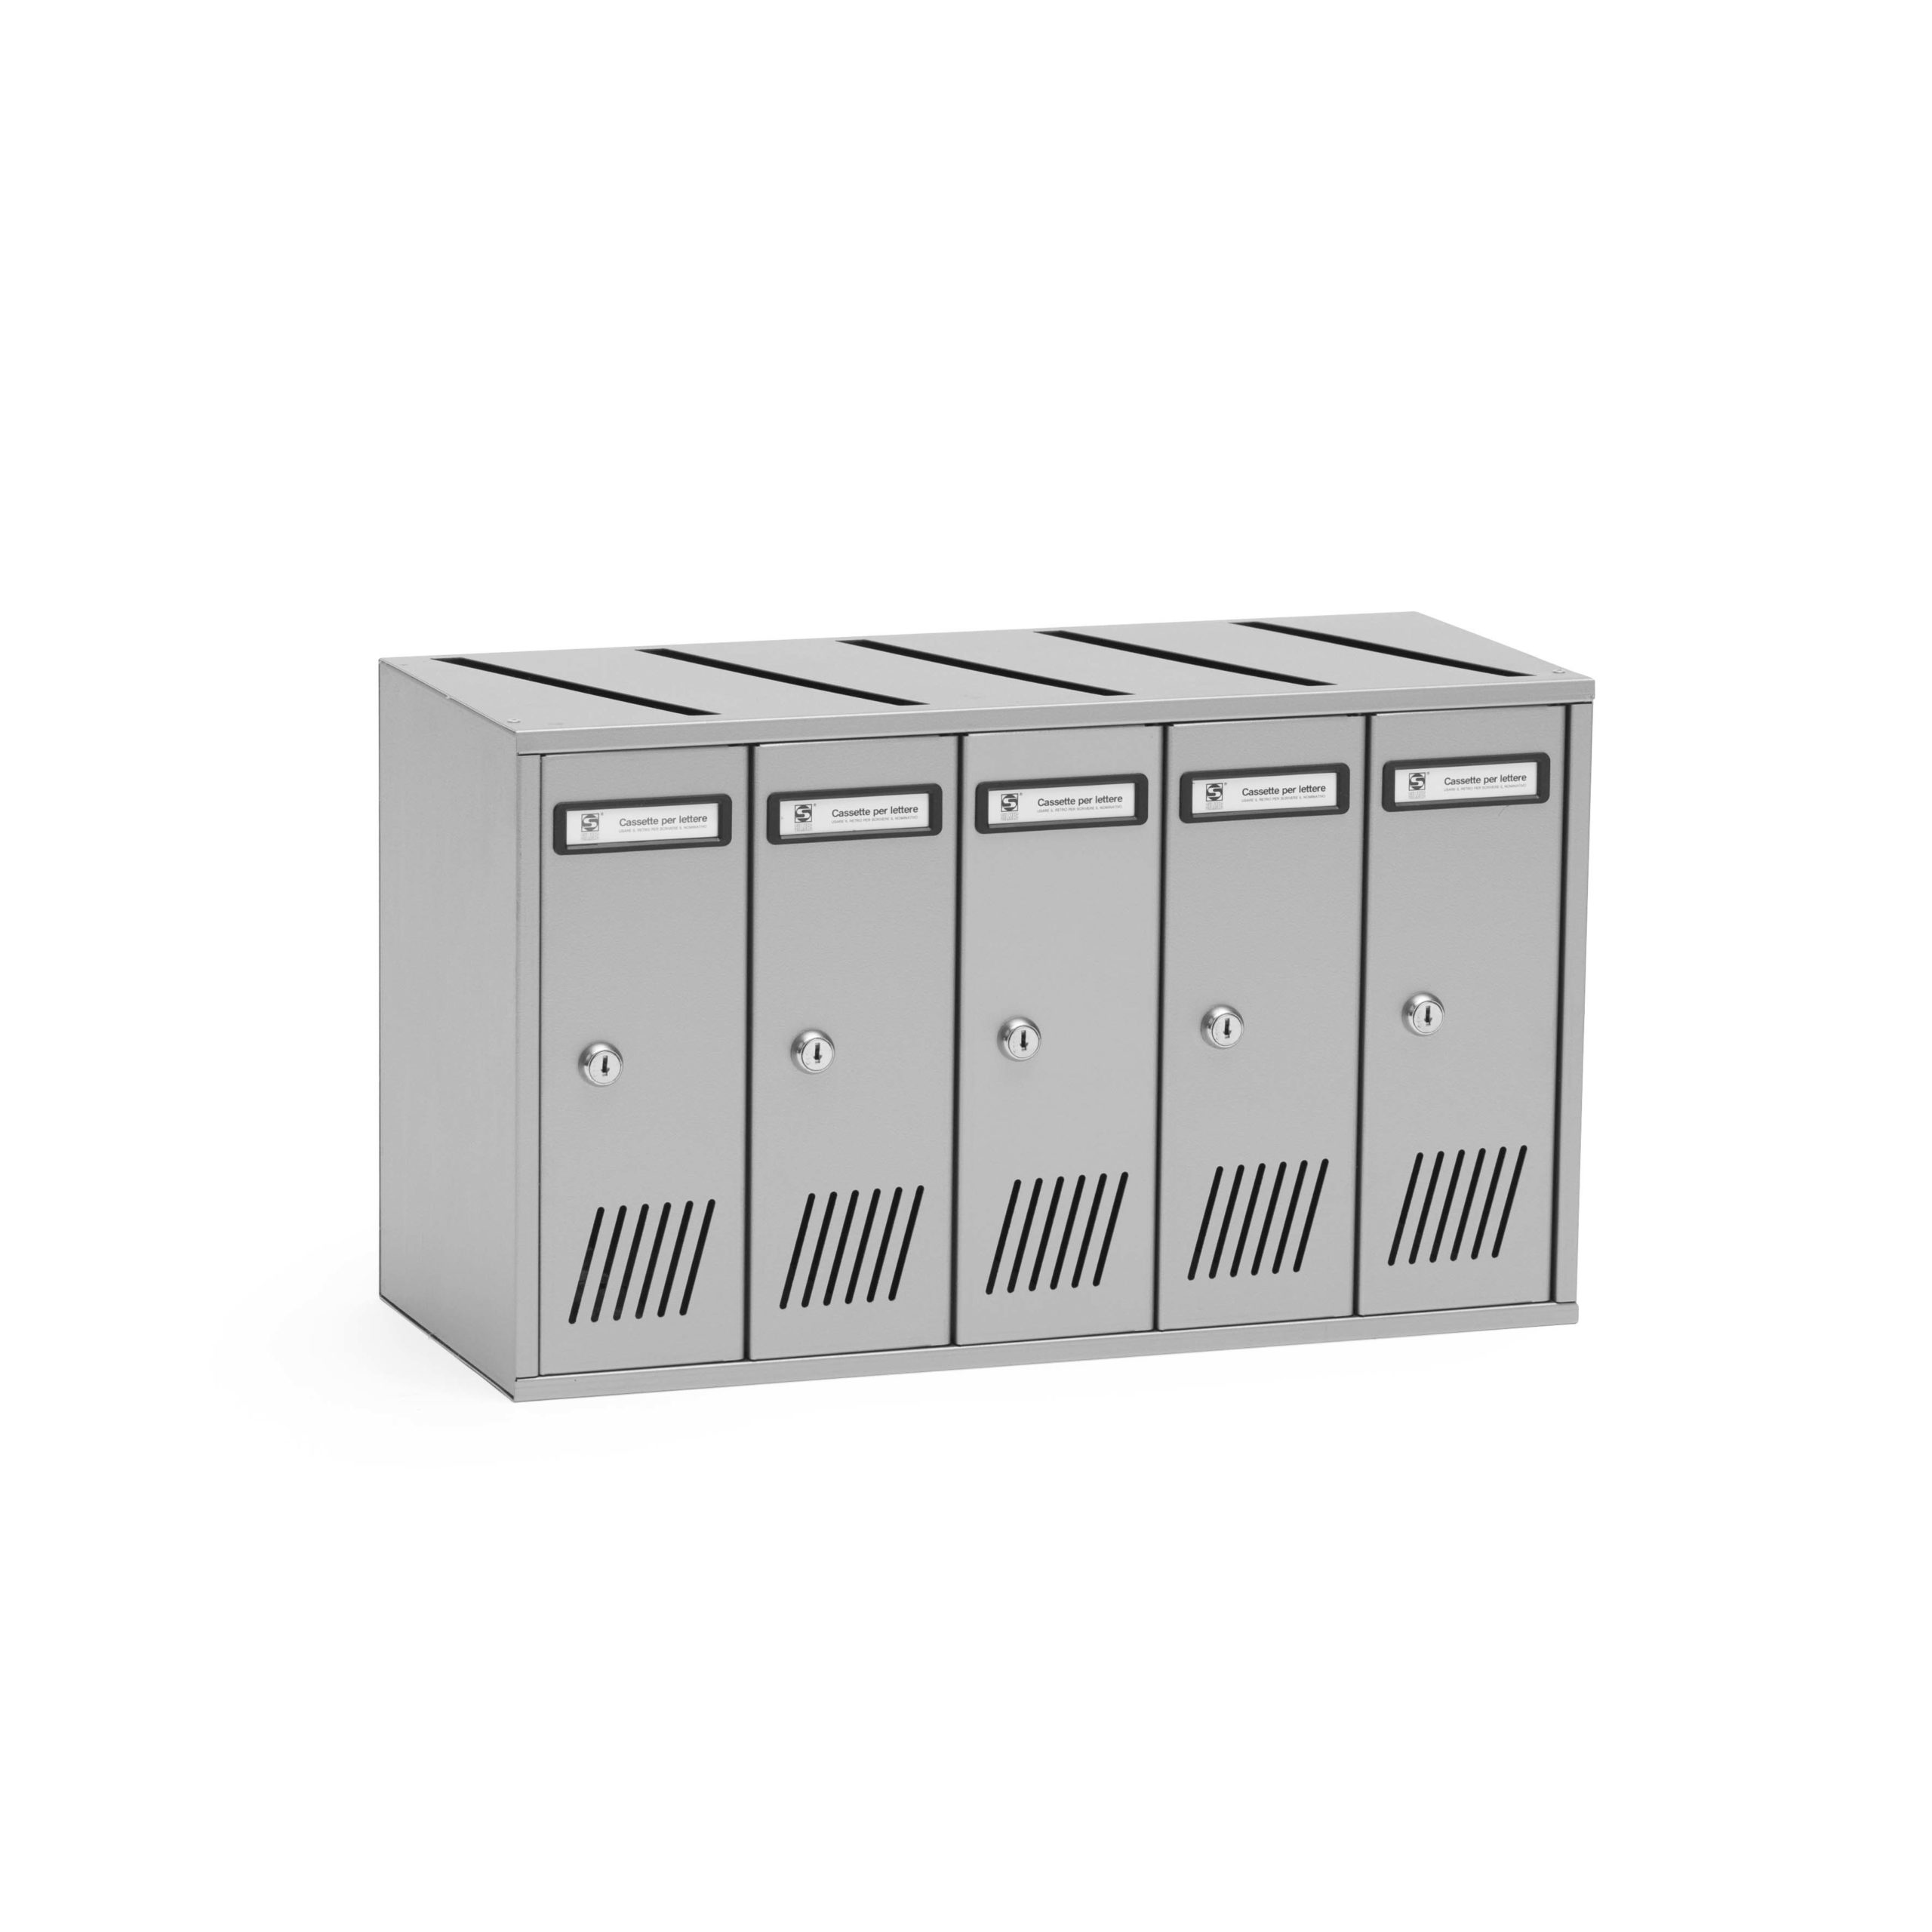 Standard modular letterbox units SC7V – 5 letterboxes